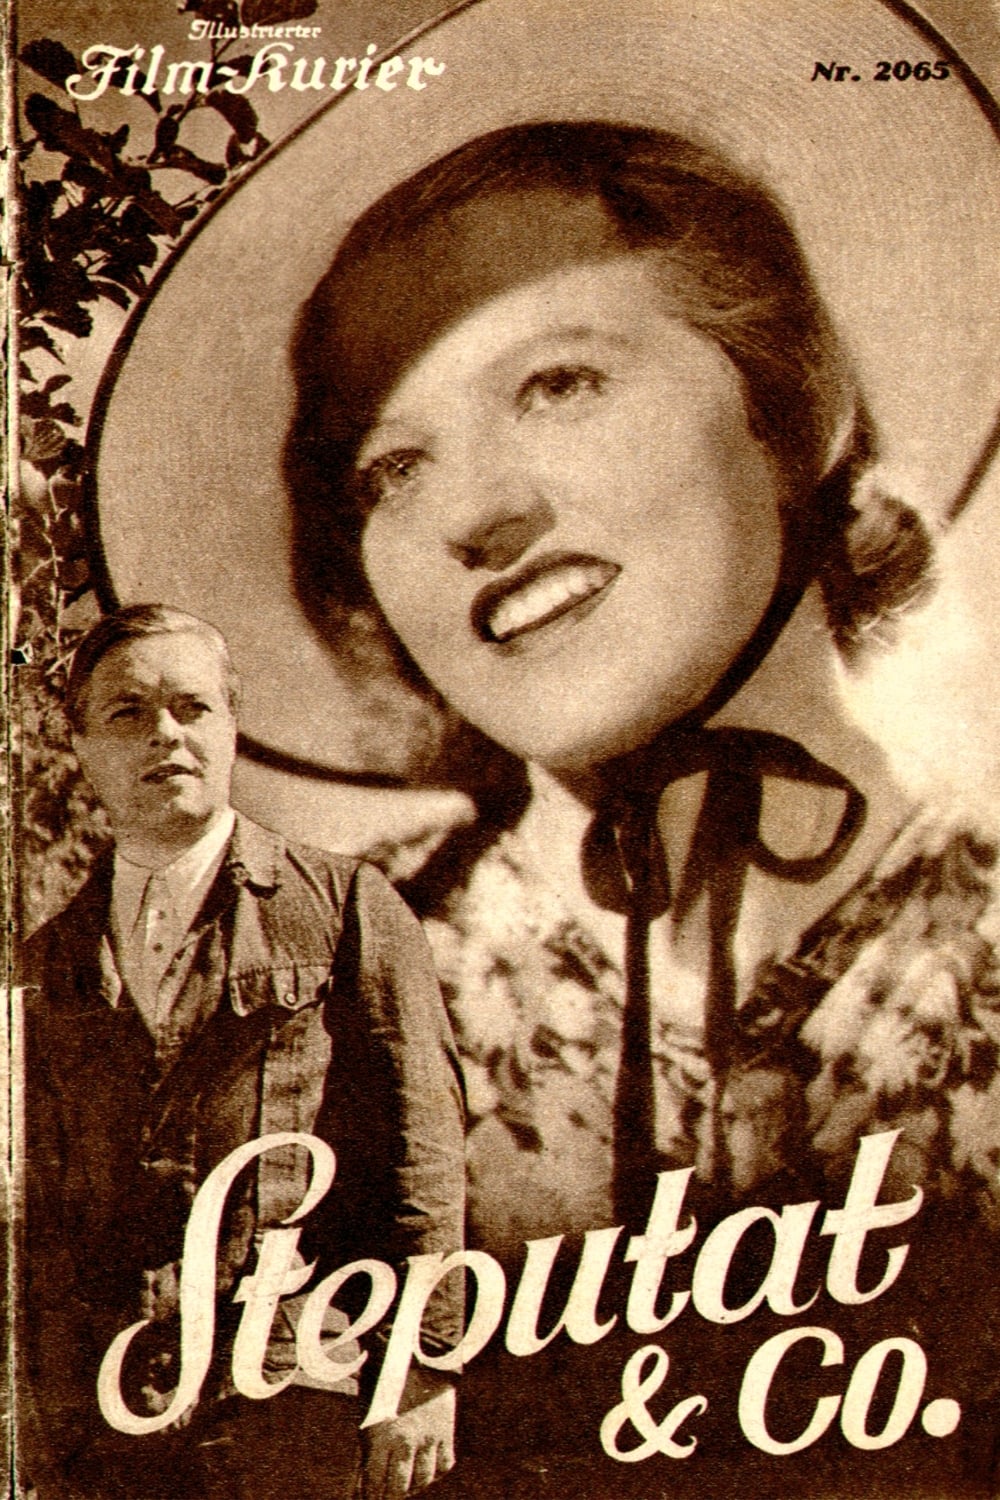 Steputat & Co. (1938)